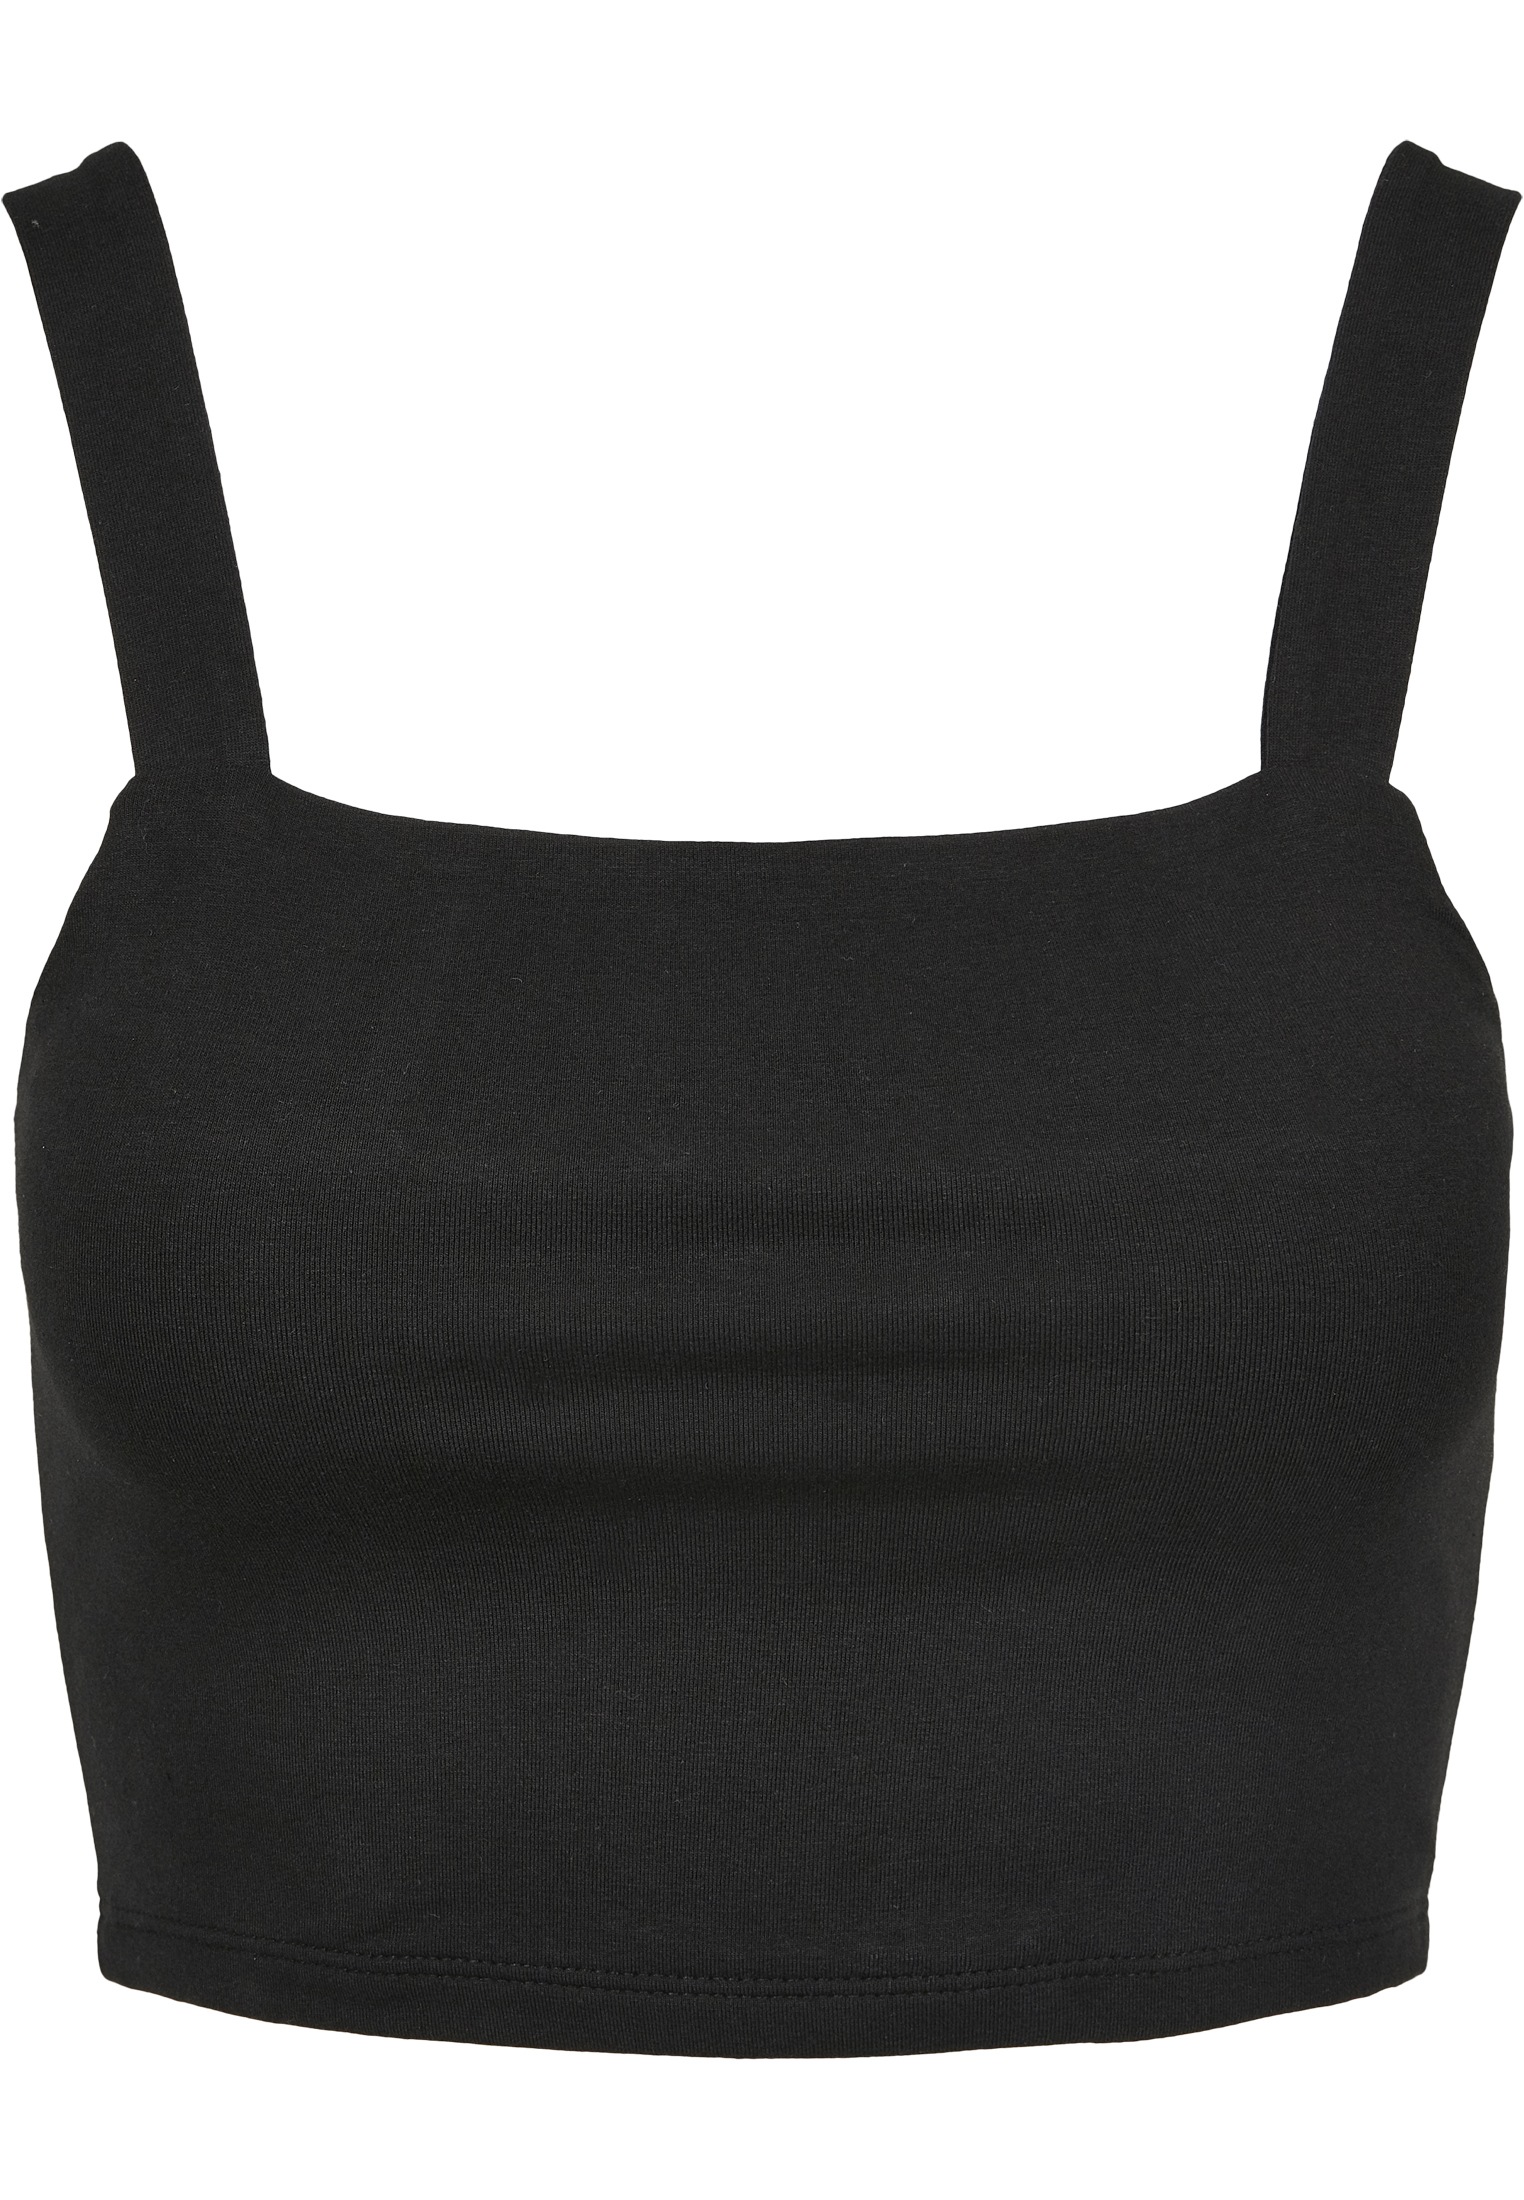 »Damen Black Cropped (1 | Friday Strandshirt Top CLASSICS tlg.) 2-Pack«, URBAN BAUR Ladies